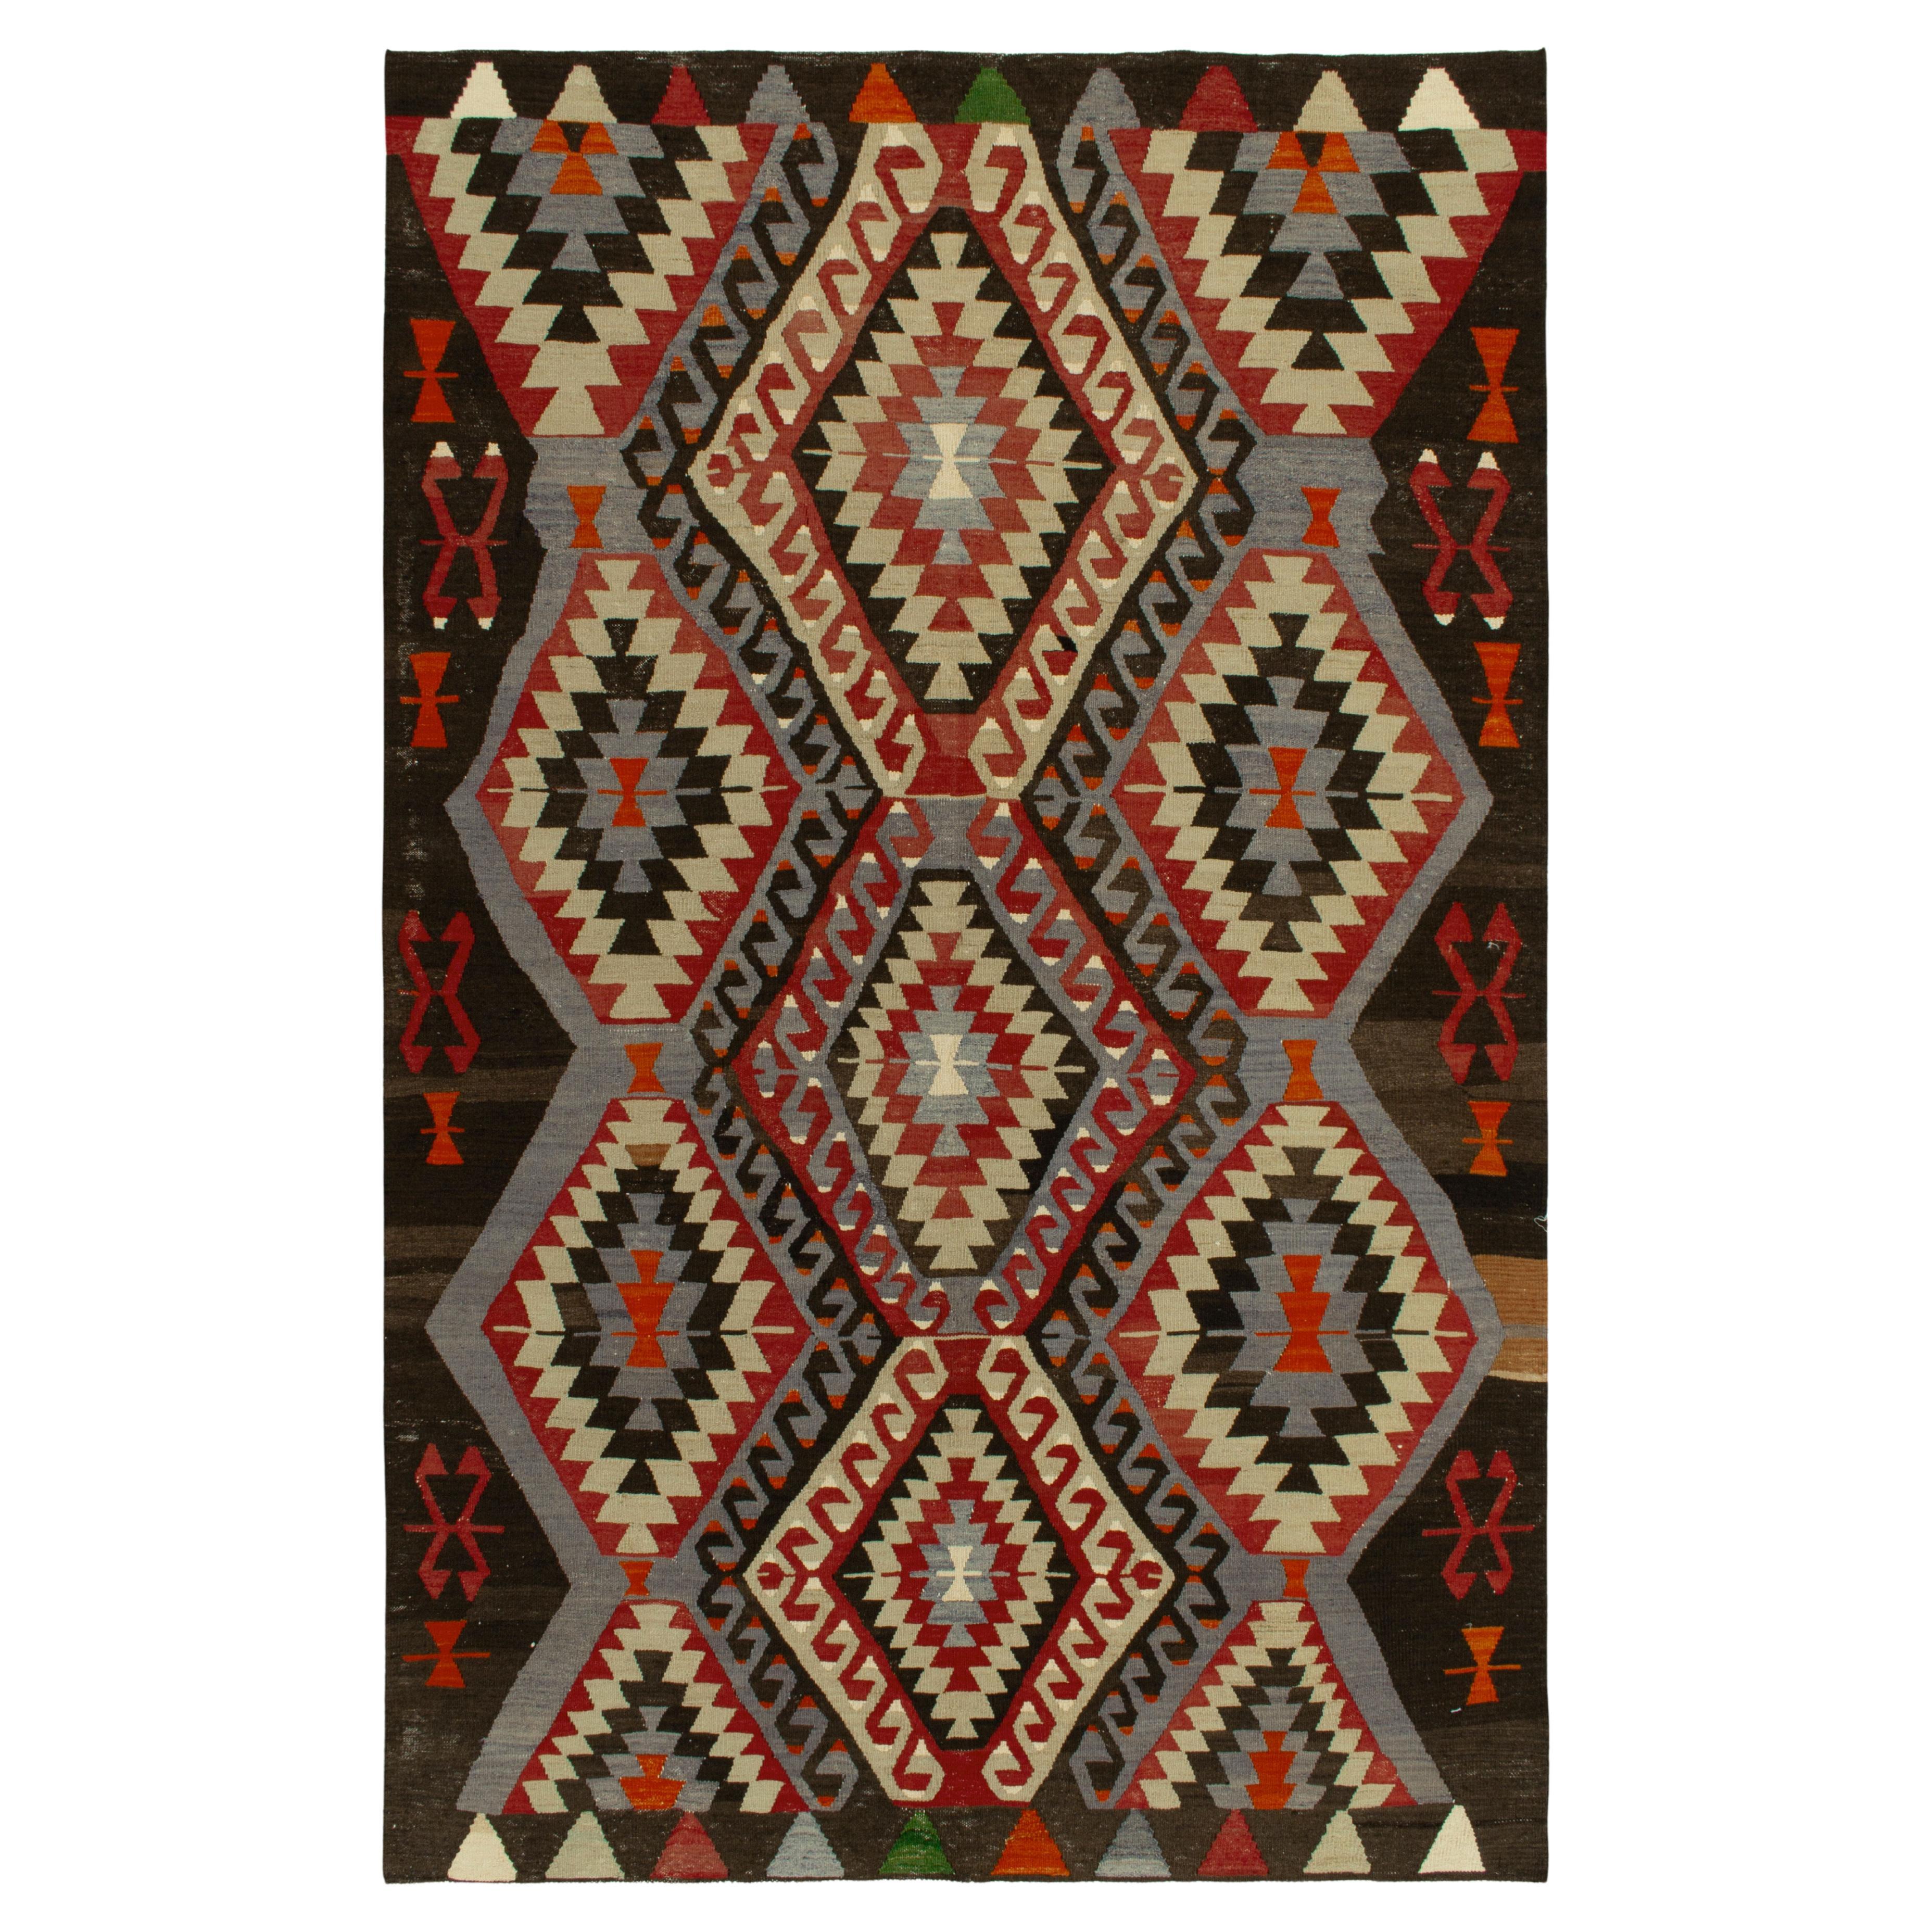 1940s Vintage Kilim in Blue, Red and Beige-Brown Tribal pattern by Rug & Kilim For Sale